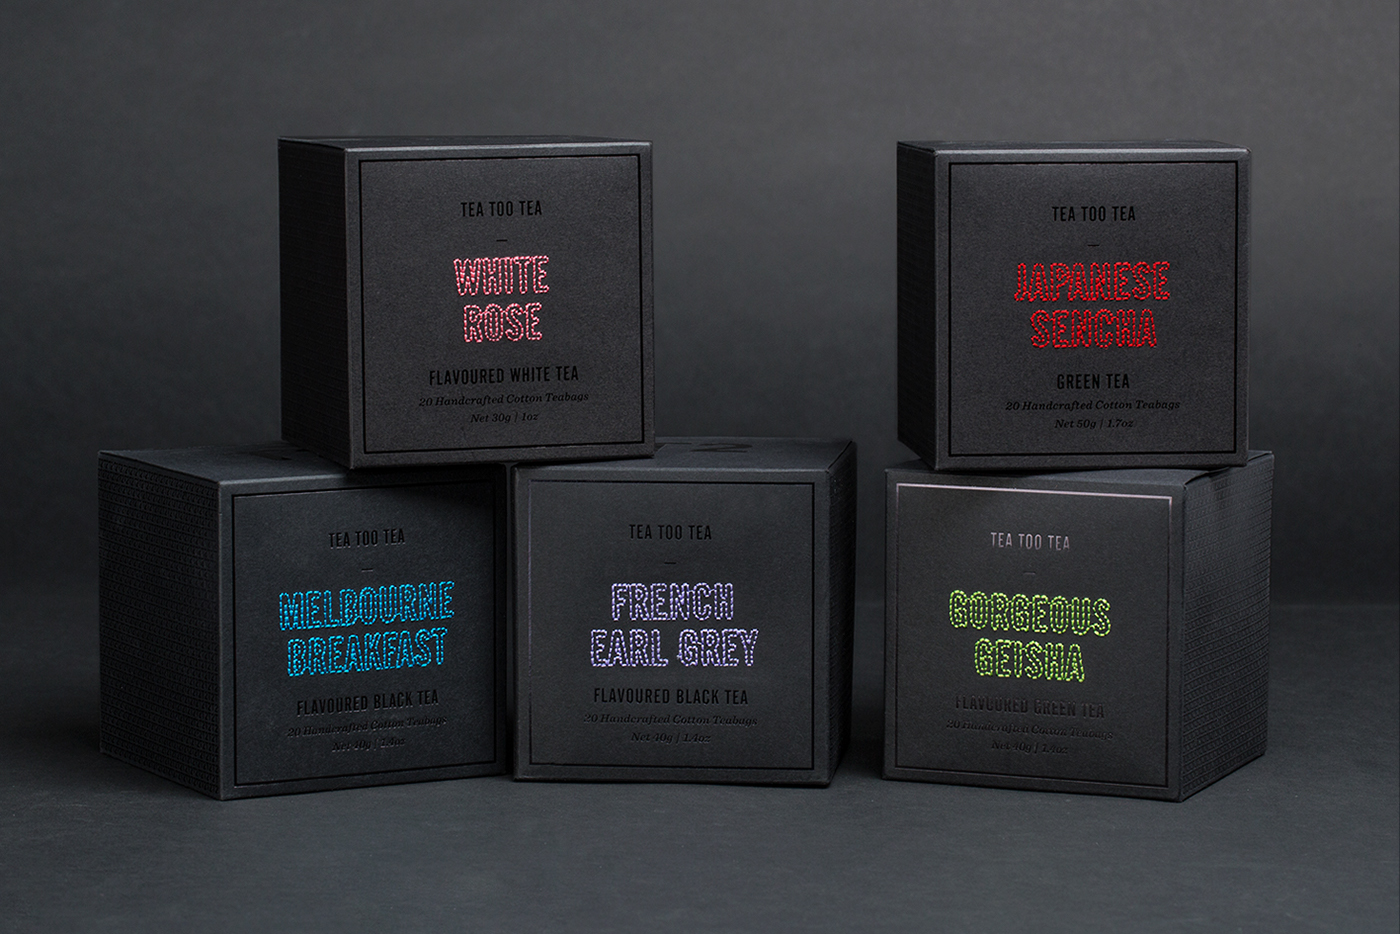 'packaging' 'graphic Design' 'design' 'tea' 'black' cotton teabags t2